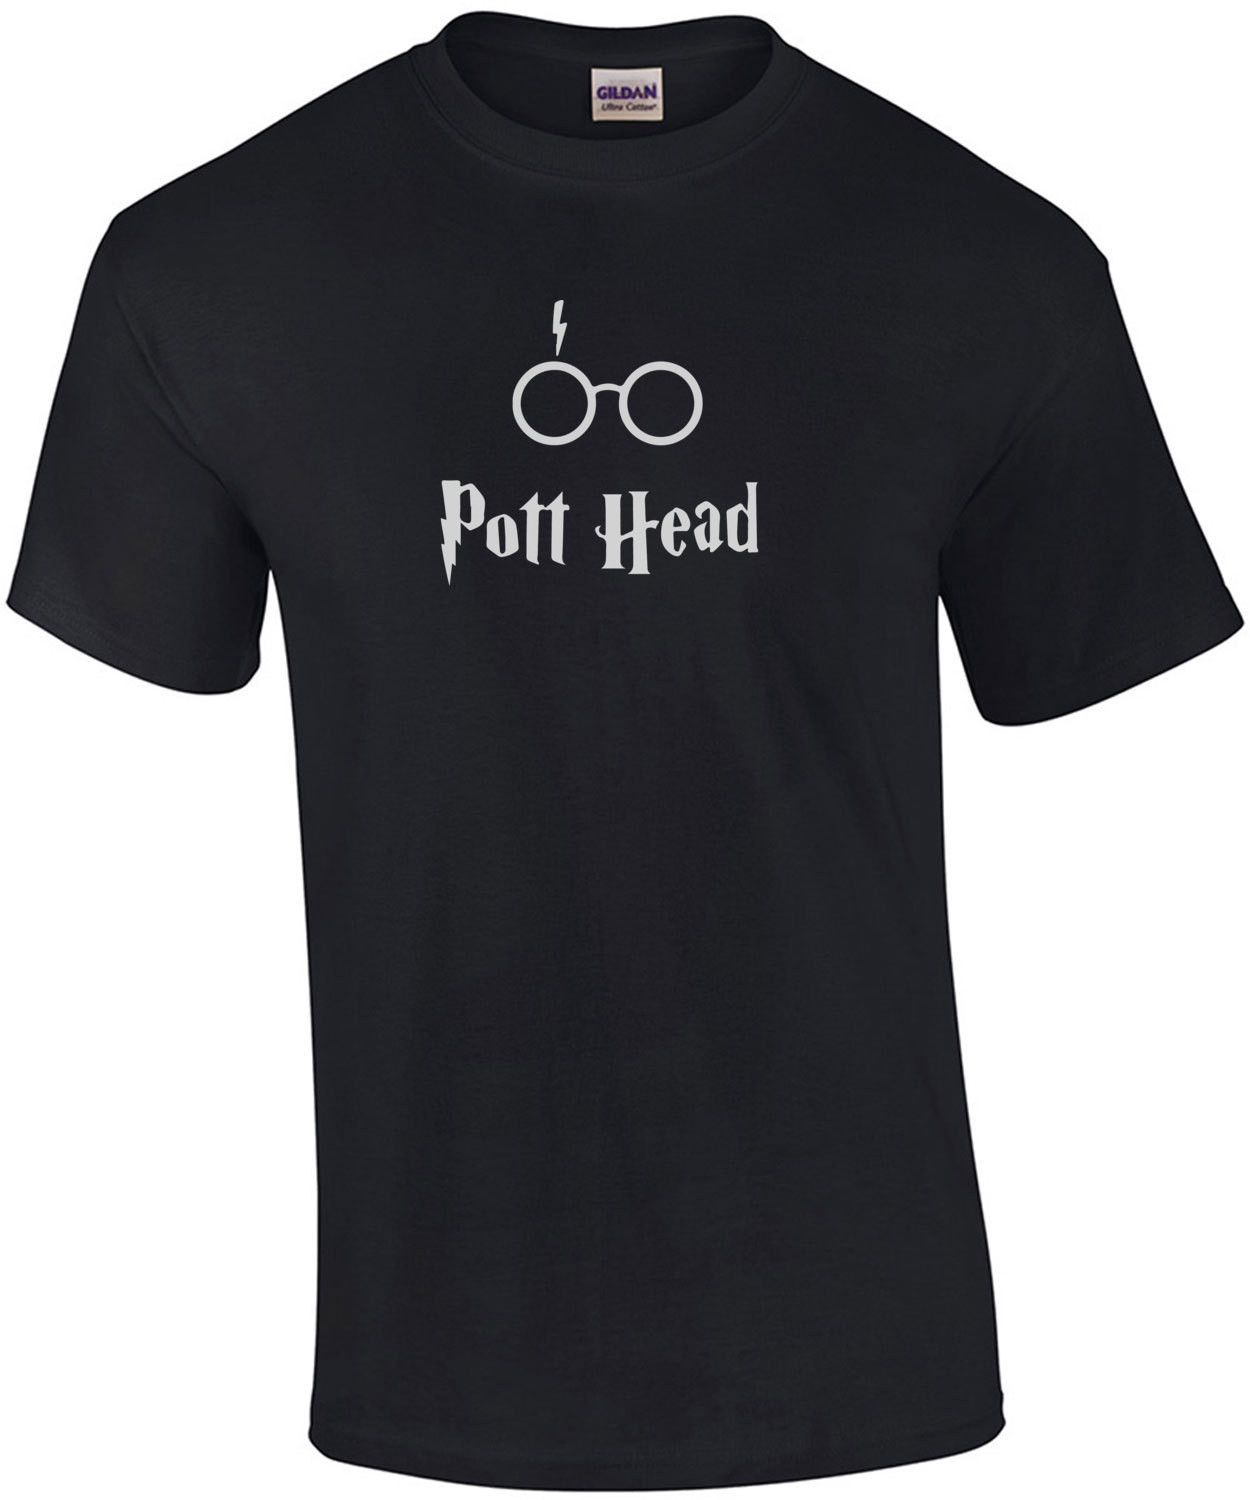 Pott Head - Harry Potter